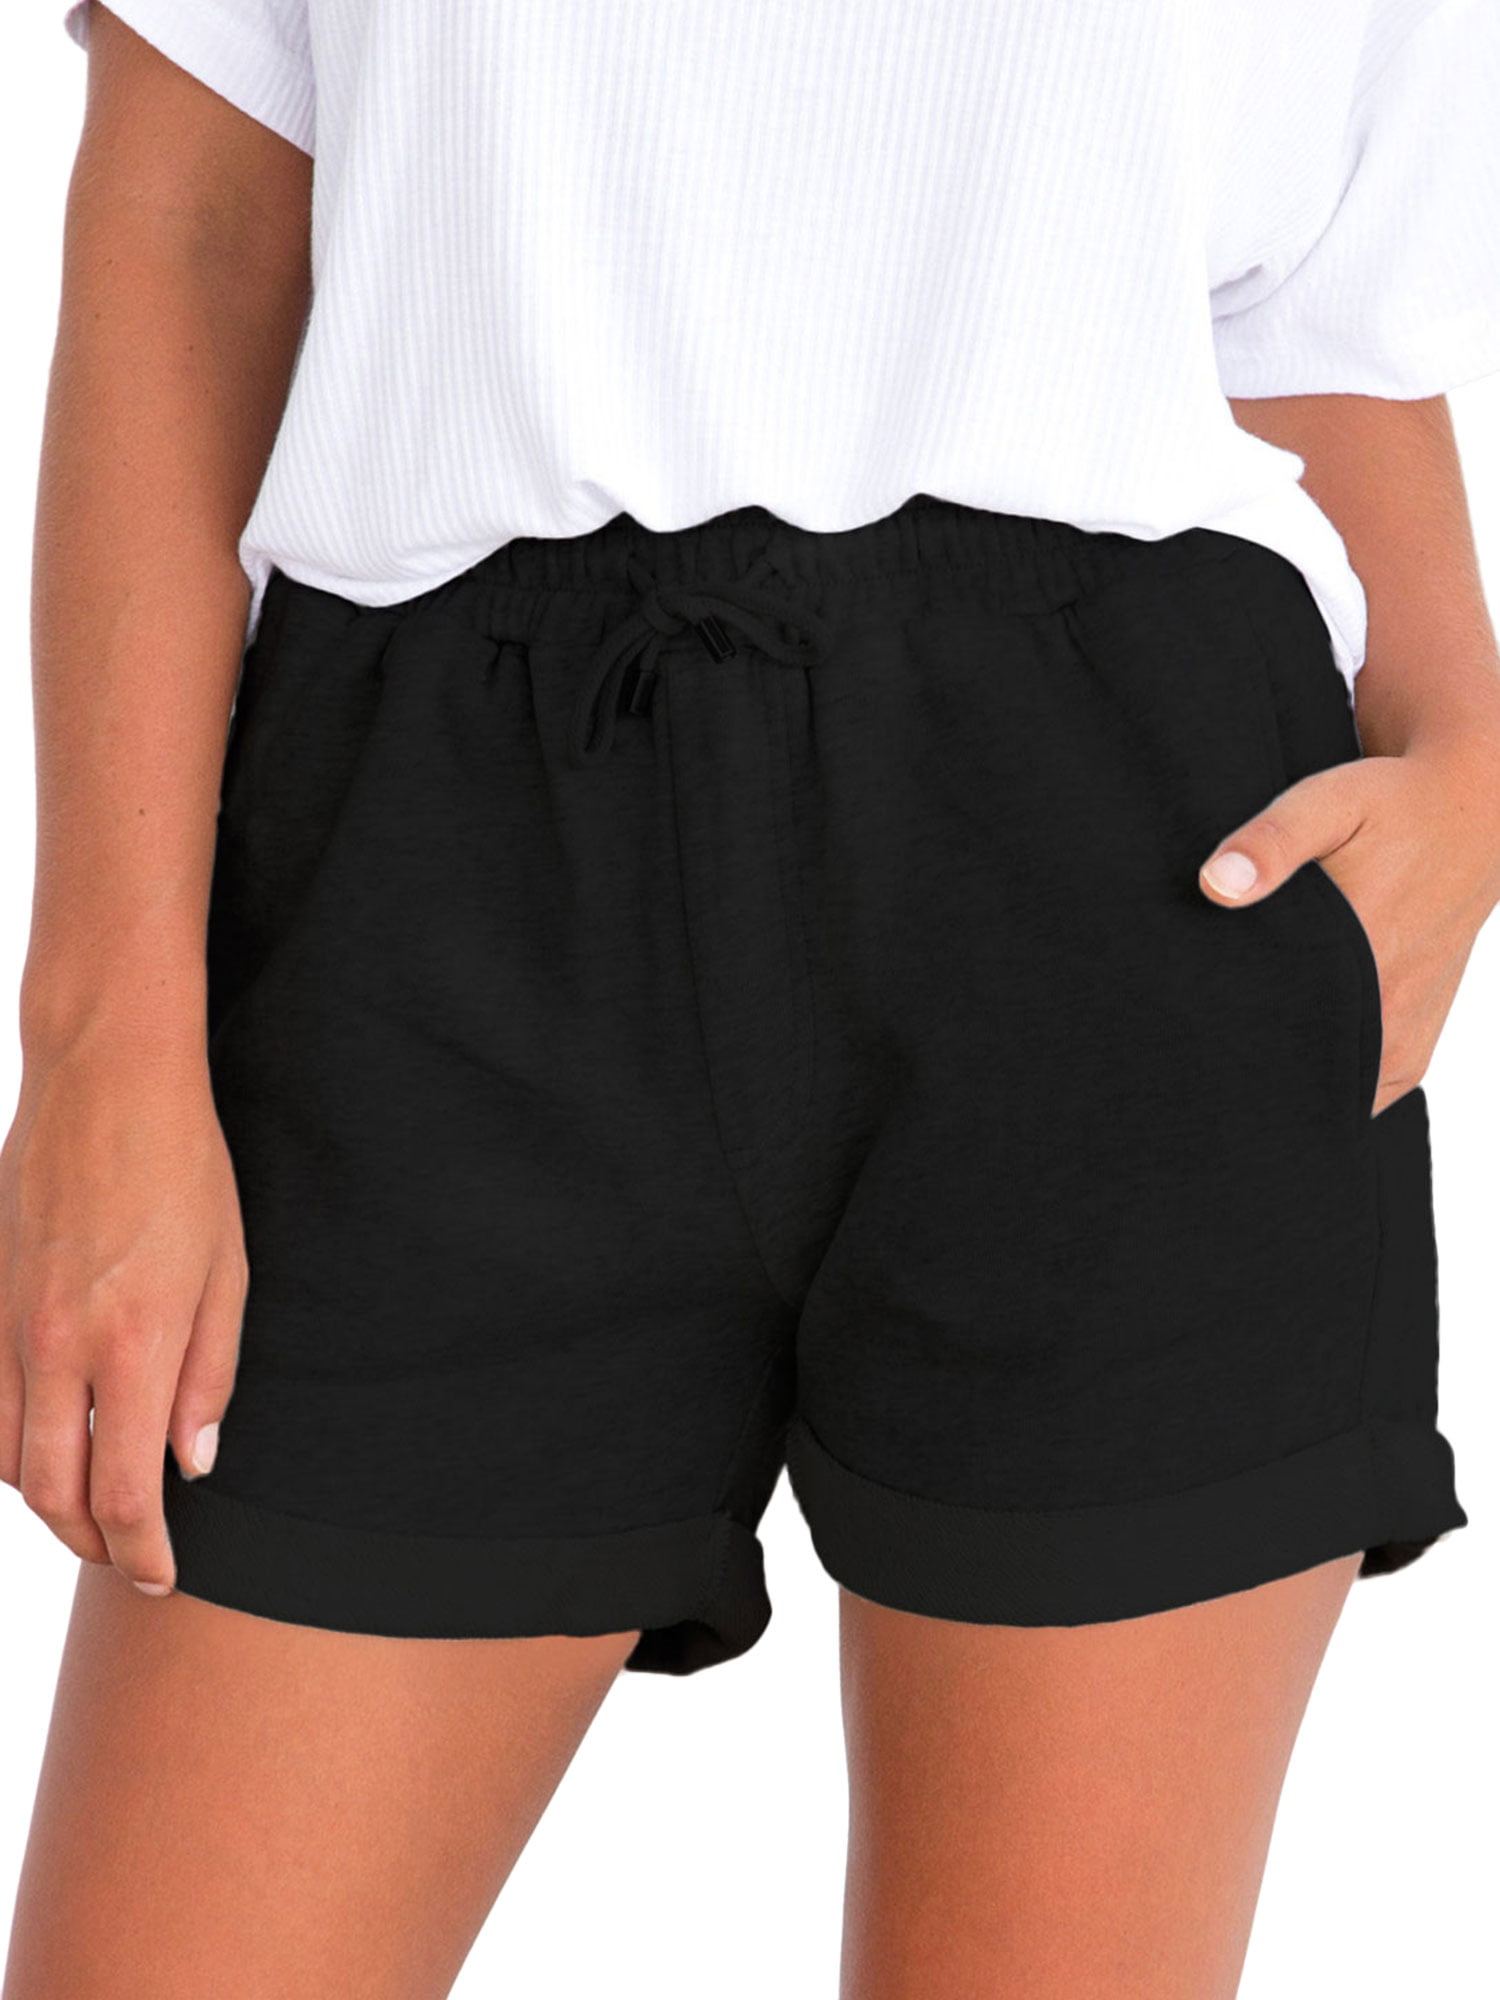 Women Sleep Pajamas Shorts Casual High Waist Casual Sleepwear Nightwear  Loungewear Short Pants Bottoms - Walmart.com